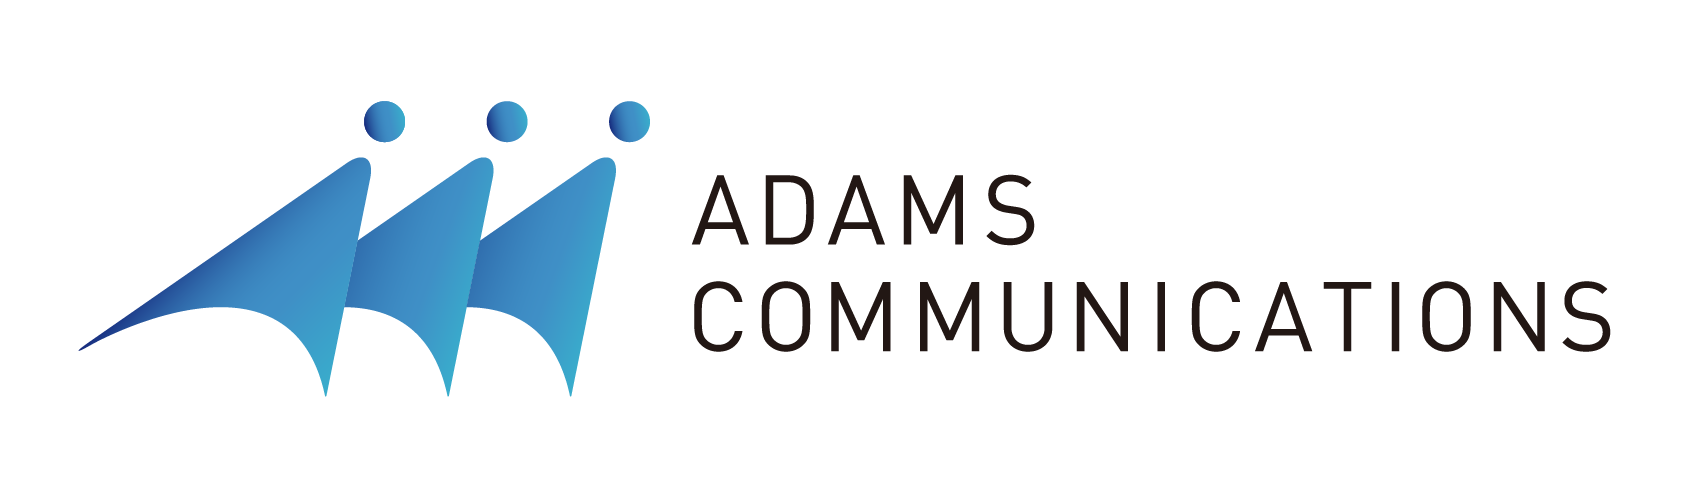 ADAMS COMMUNICATIONS